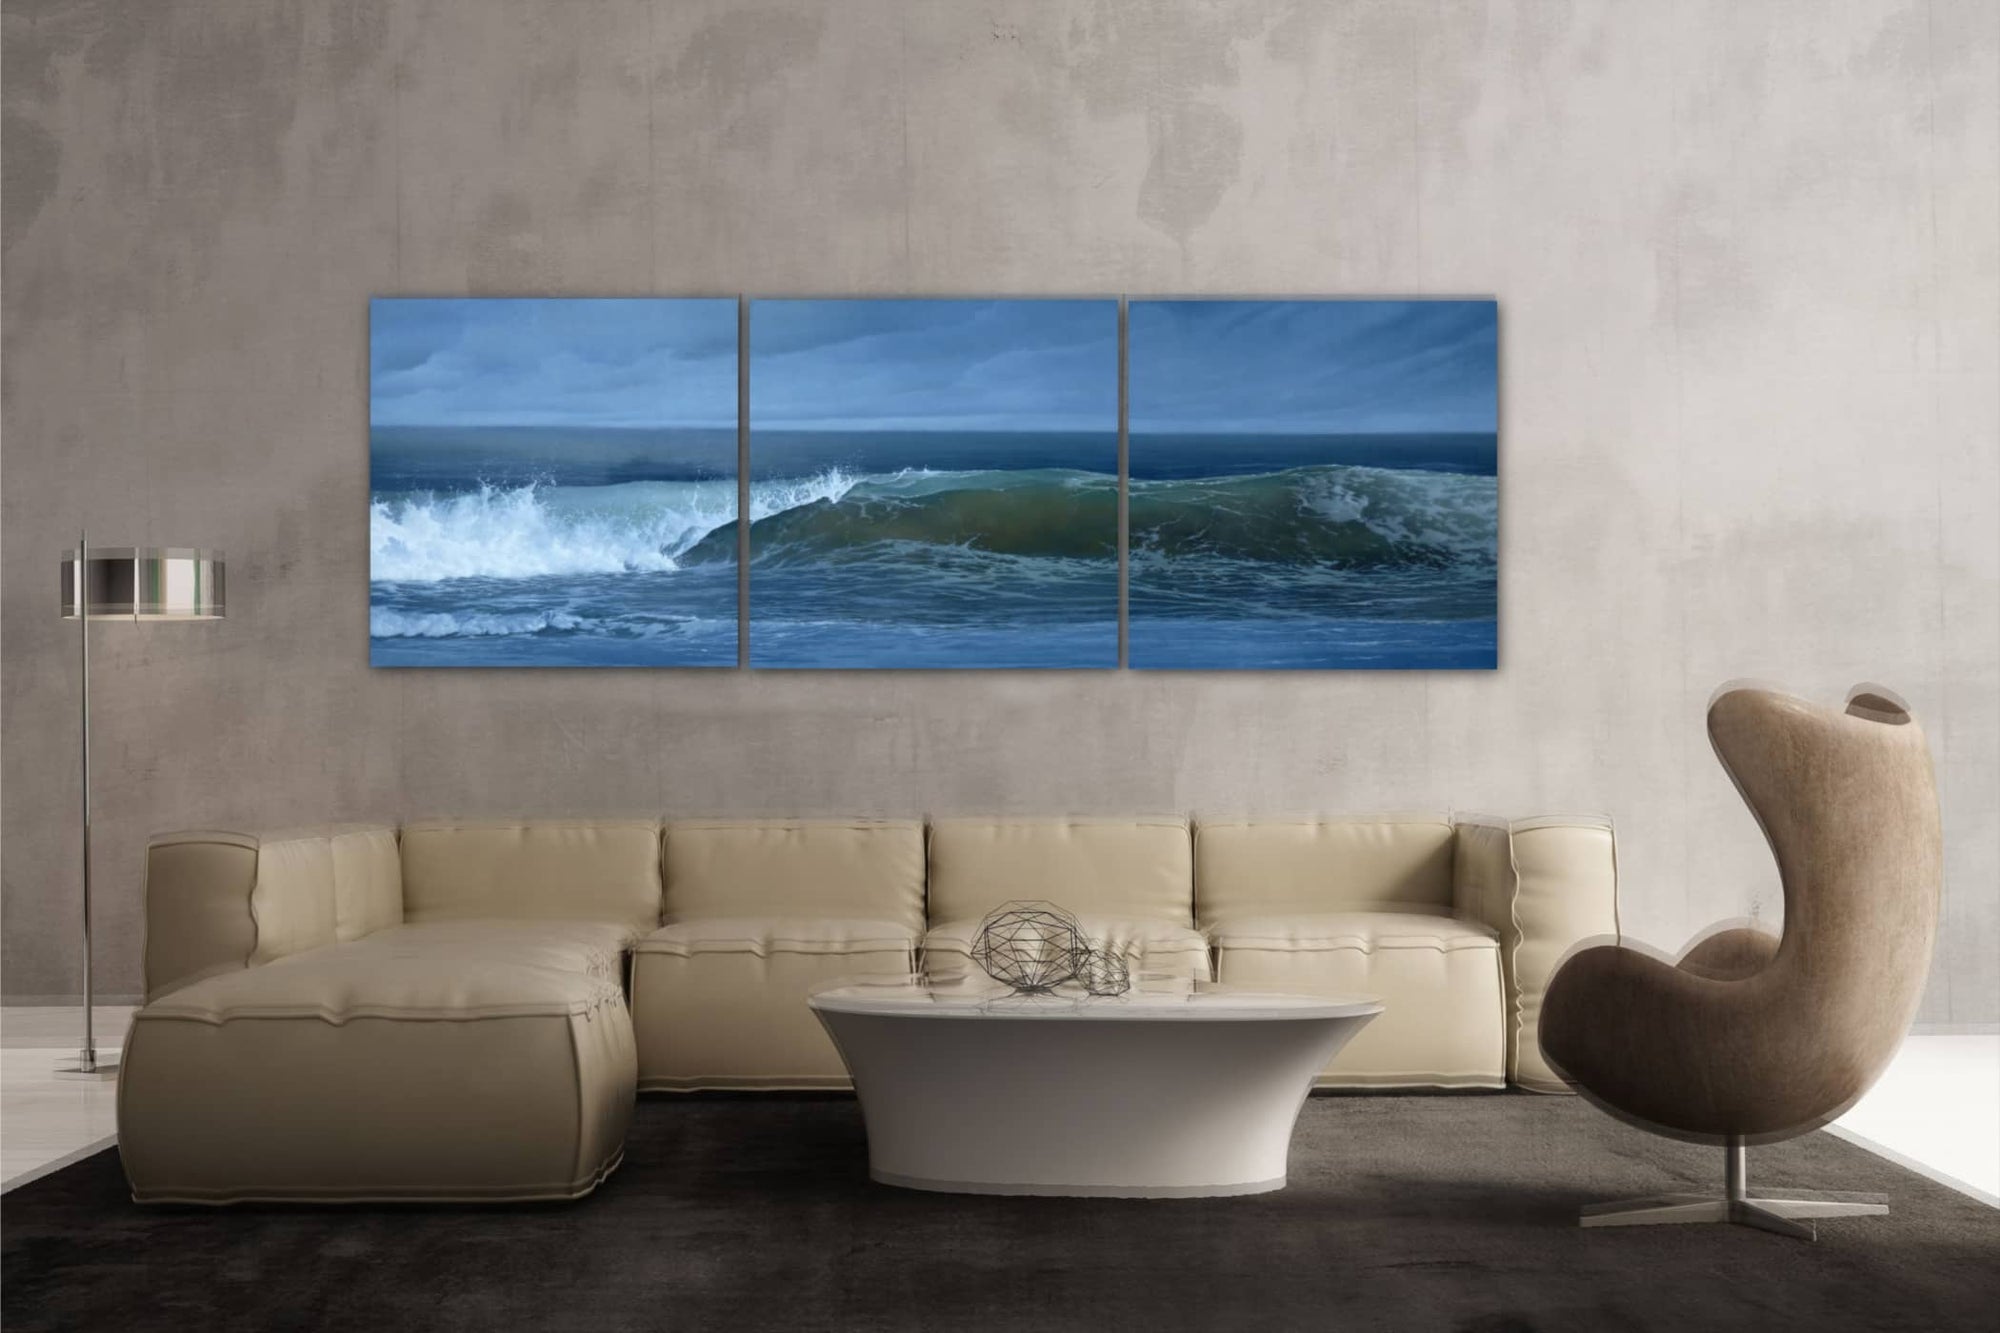 Peninsula-Based Australian Artist Jim Stagg Painting ~ 'Wave' (Triptych) - Curate Art & Design Gallery Sorrento Mornington Peninsula Melbourne